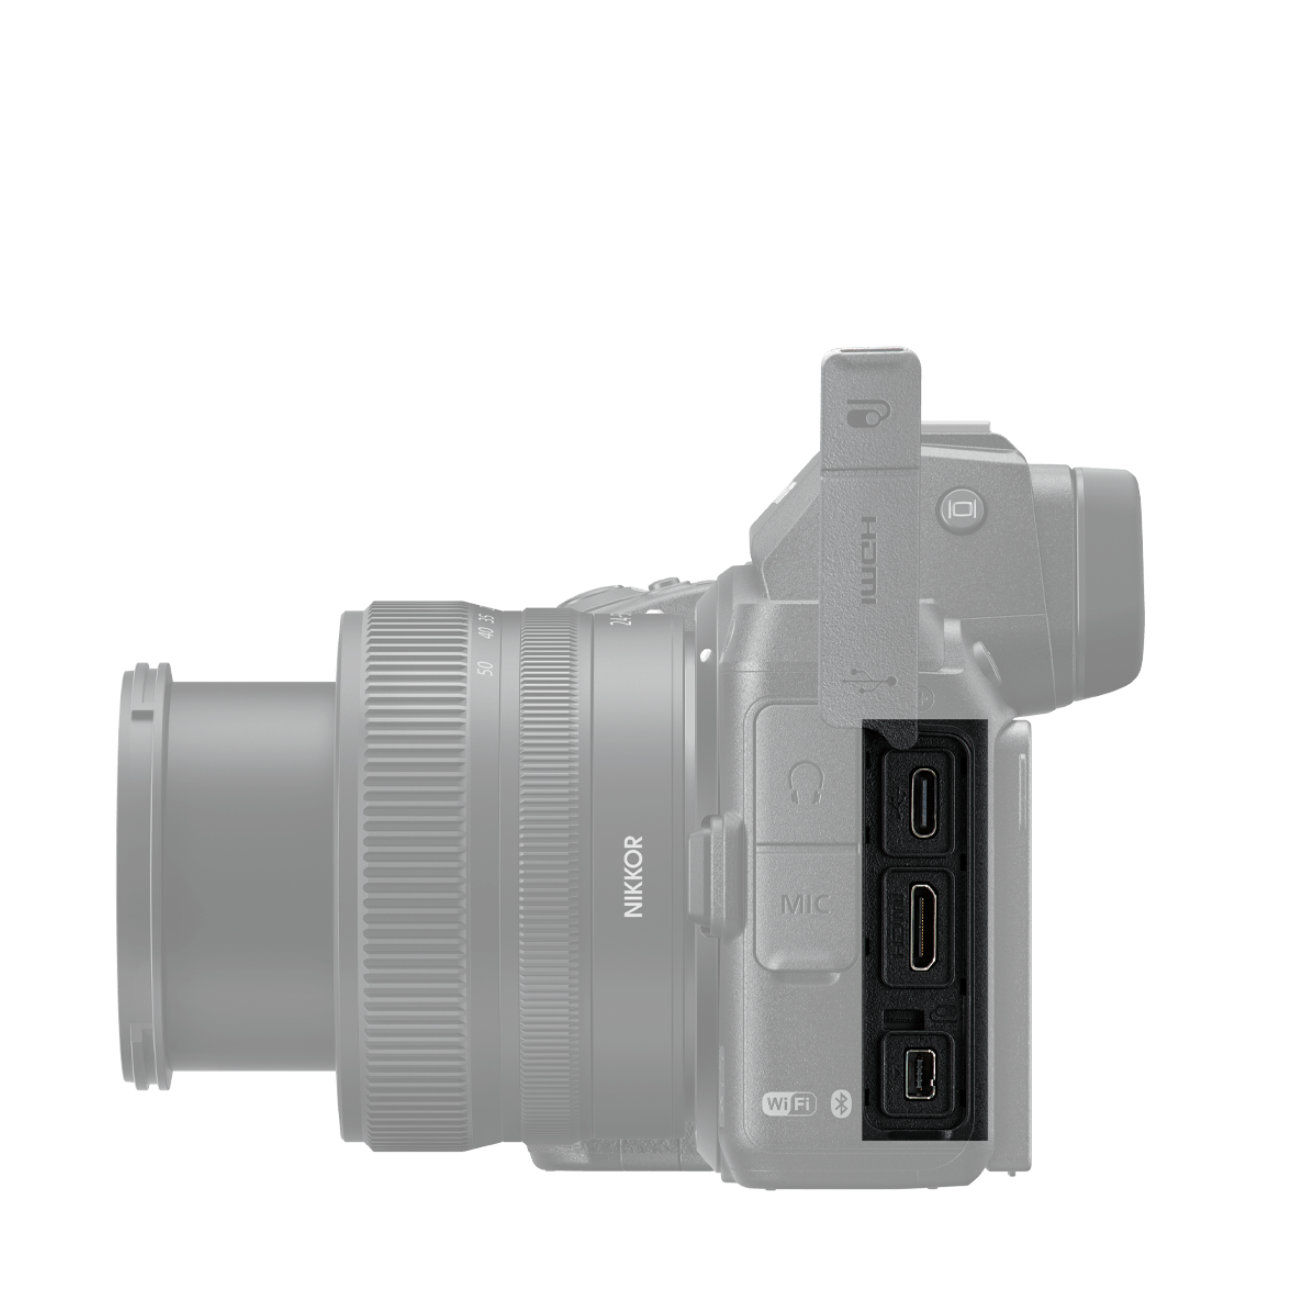 Nikon Z 50 + DX 16-50mm, 50-250mm